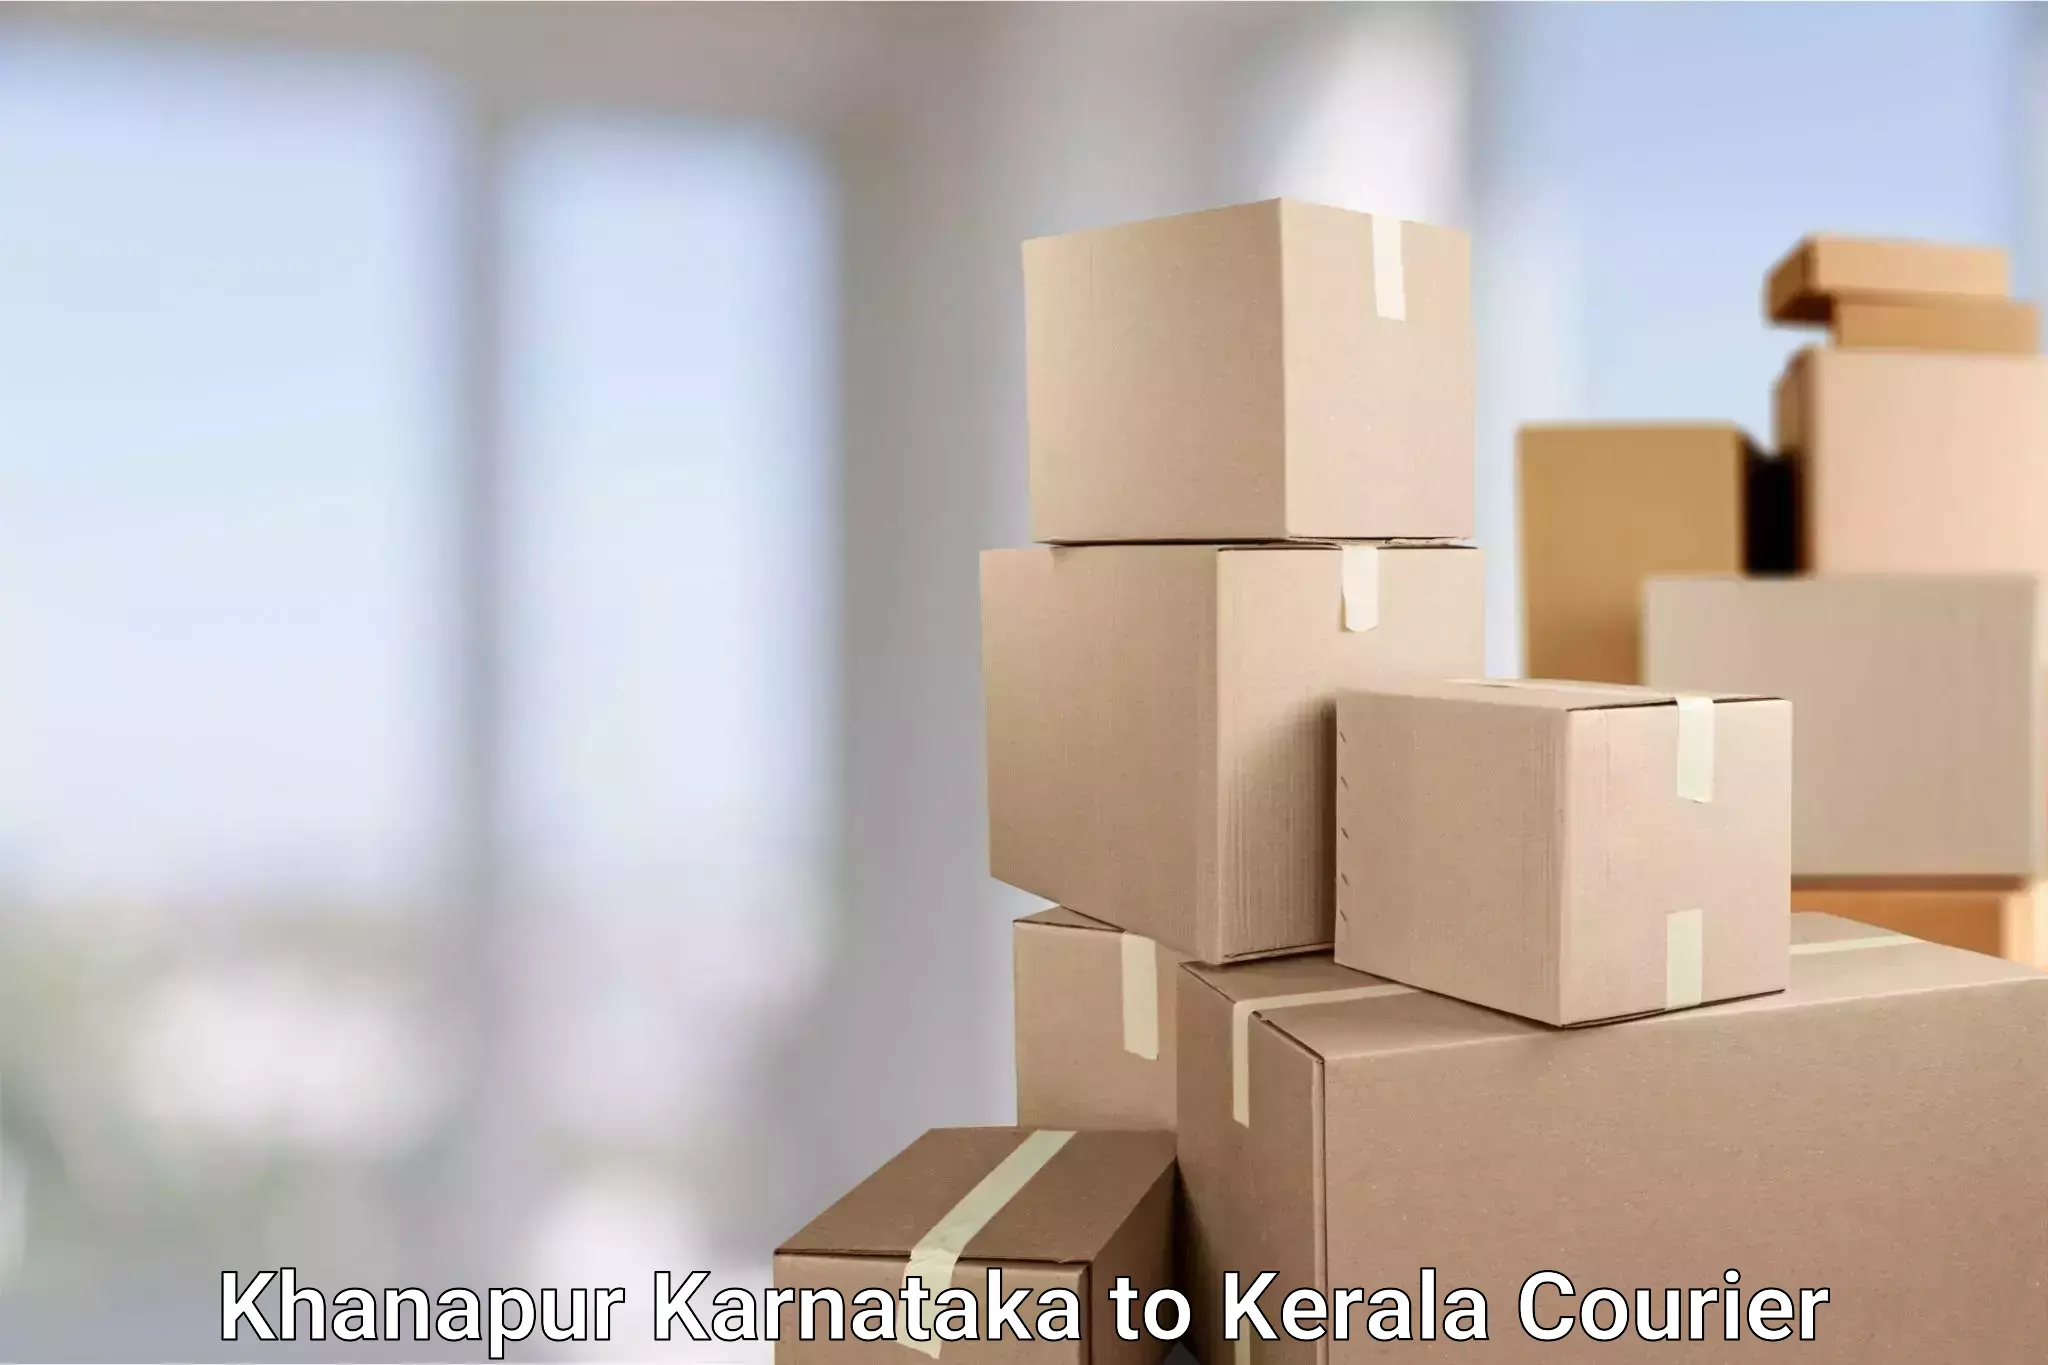 Cargo delivery service Khanapur Karnataka to Kakkayam